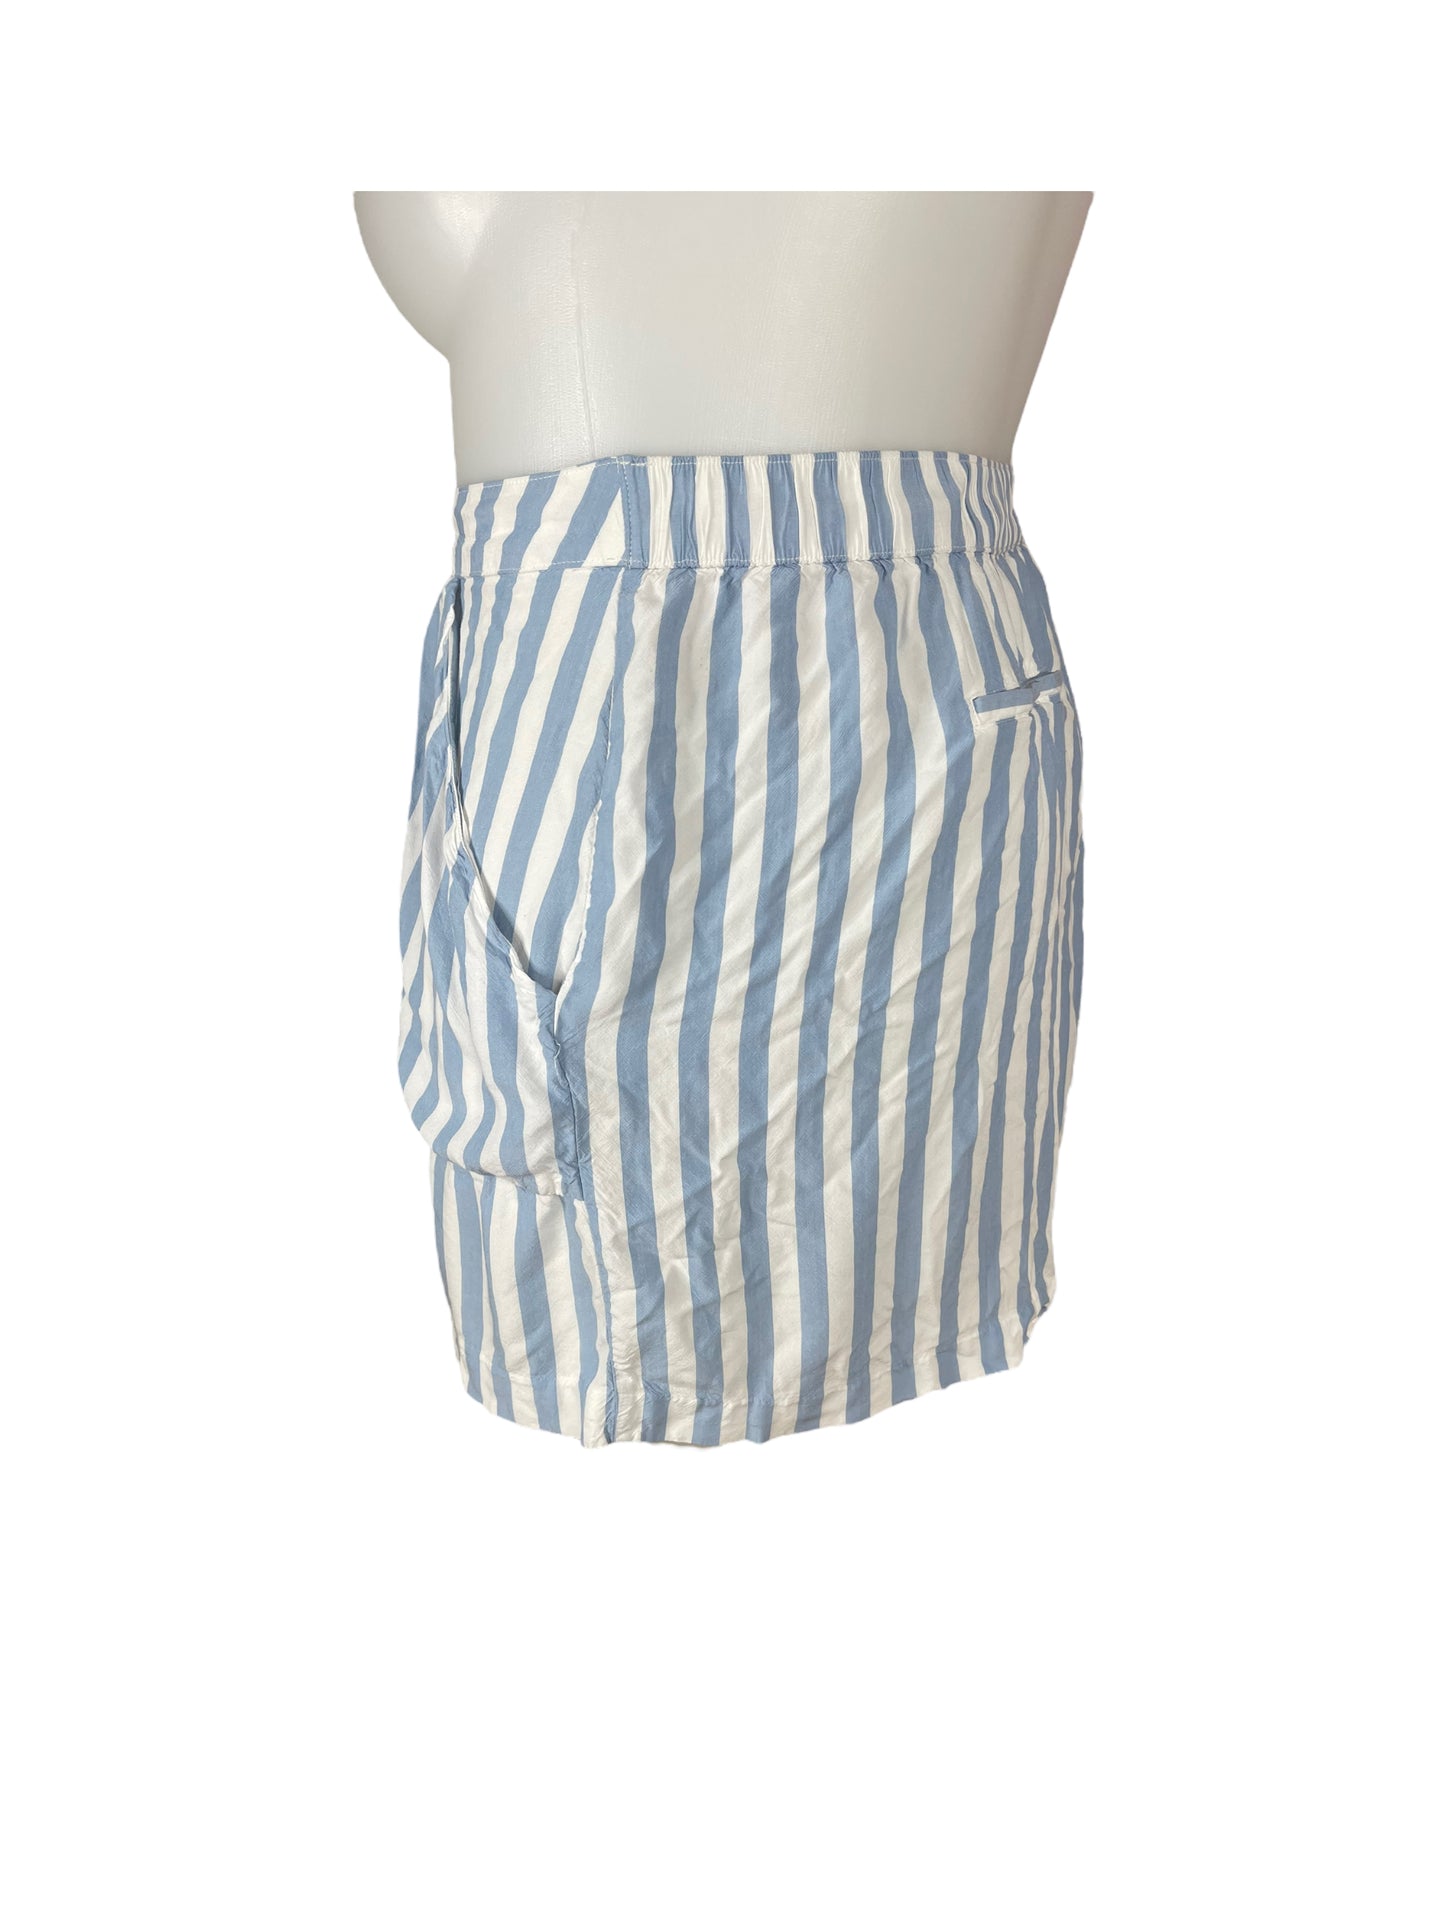 “Joe Fresh” Blue & White Striped Shorts (3X)